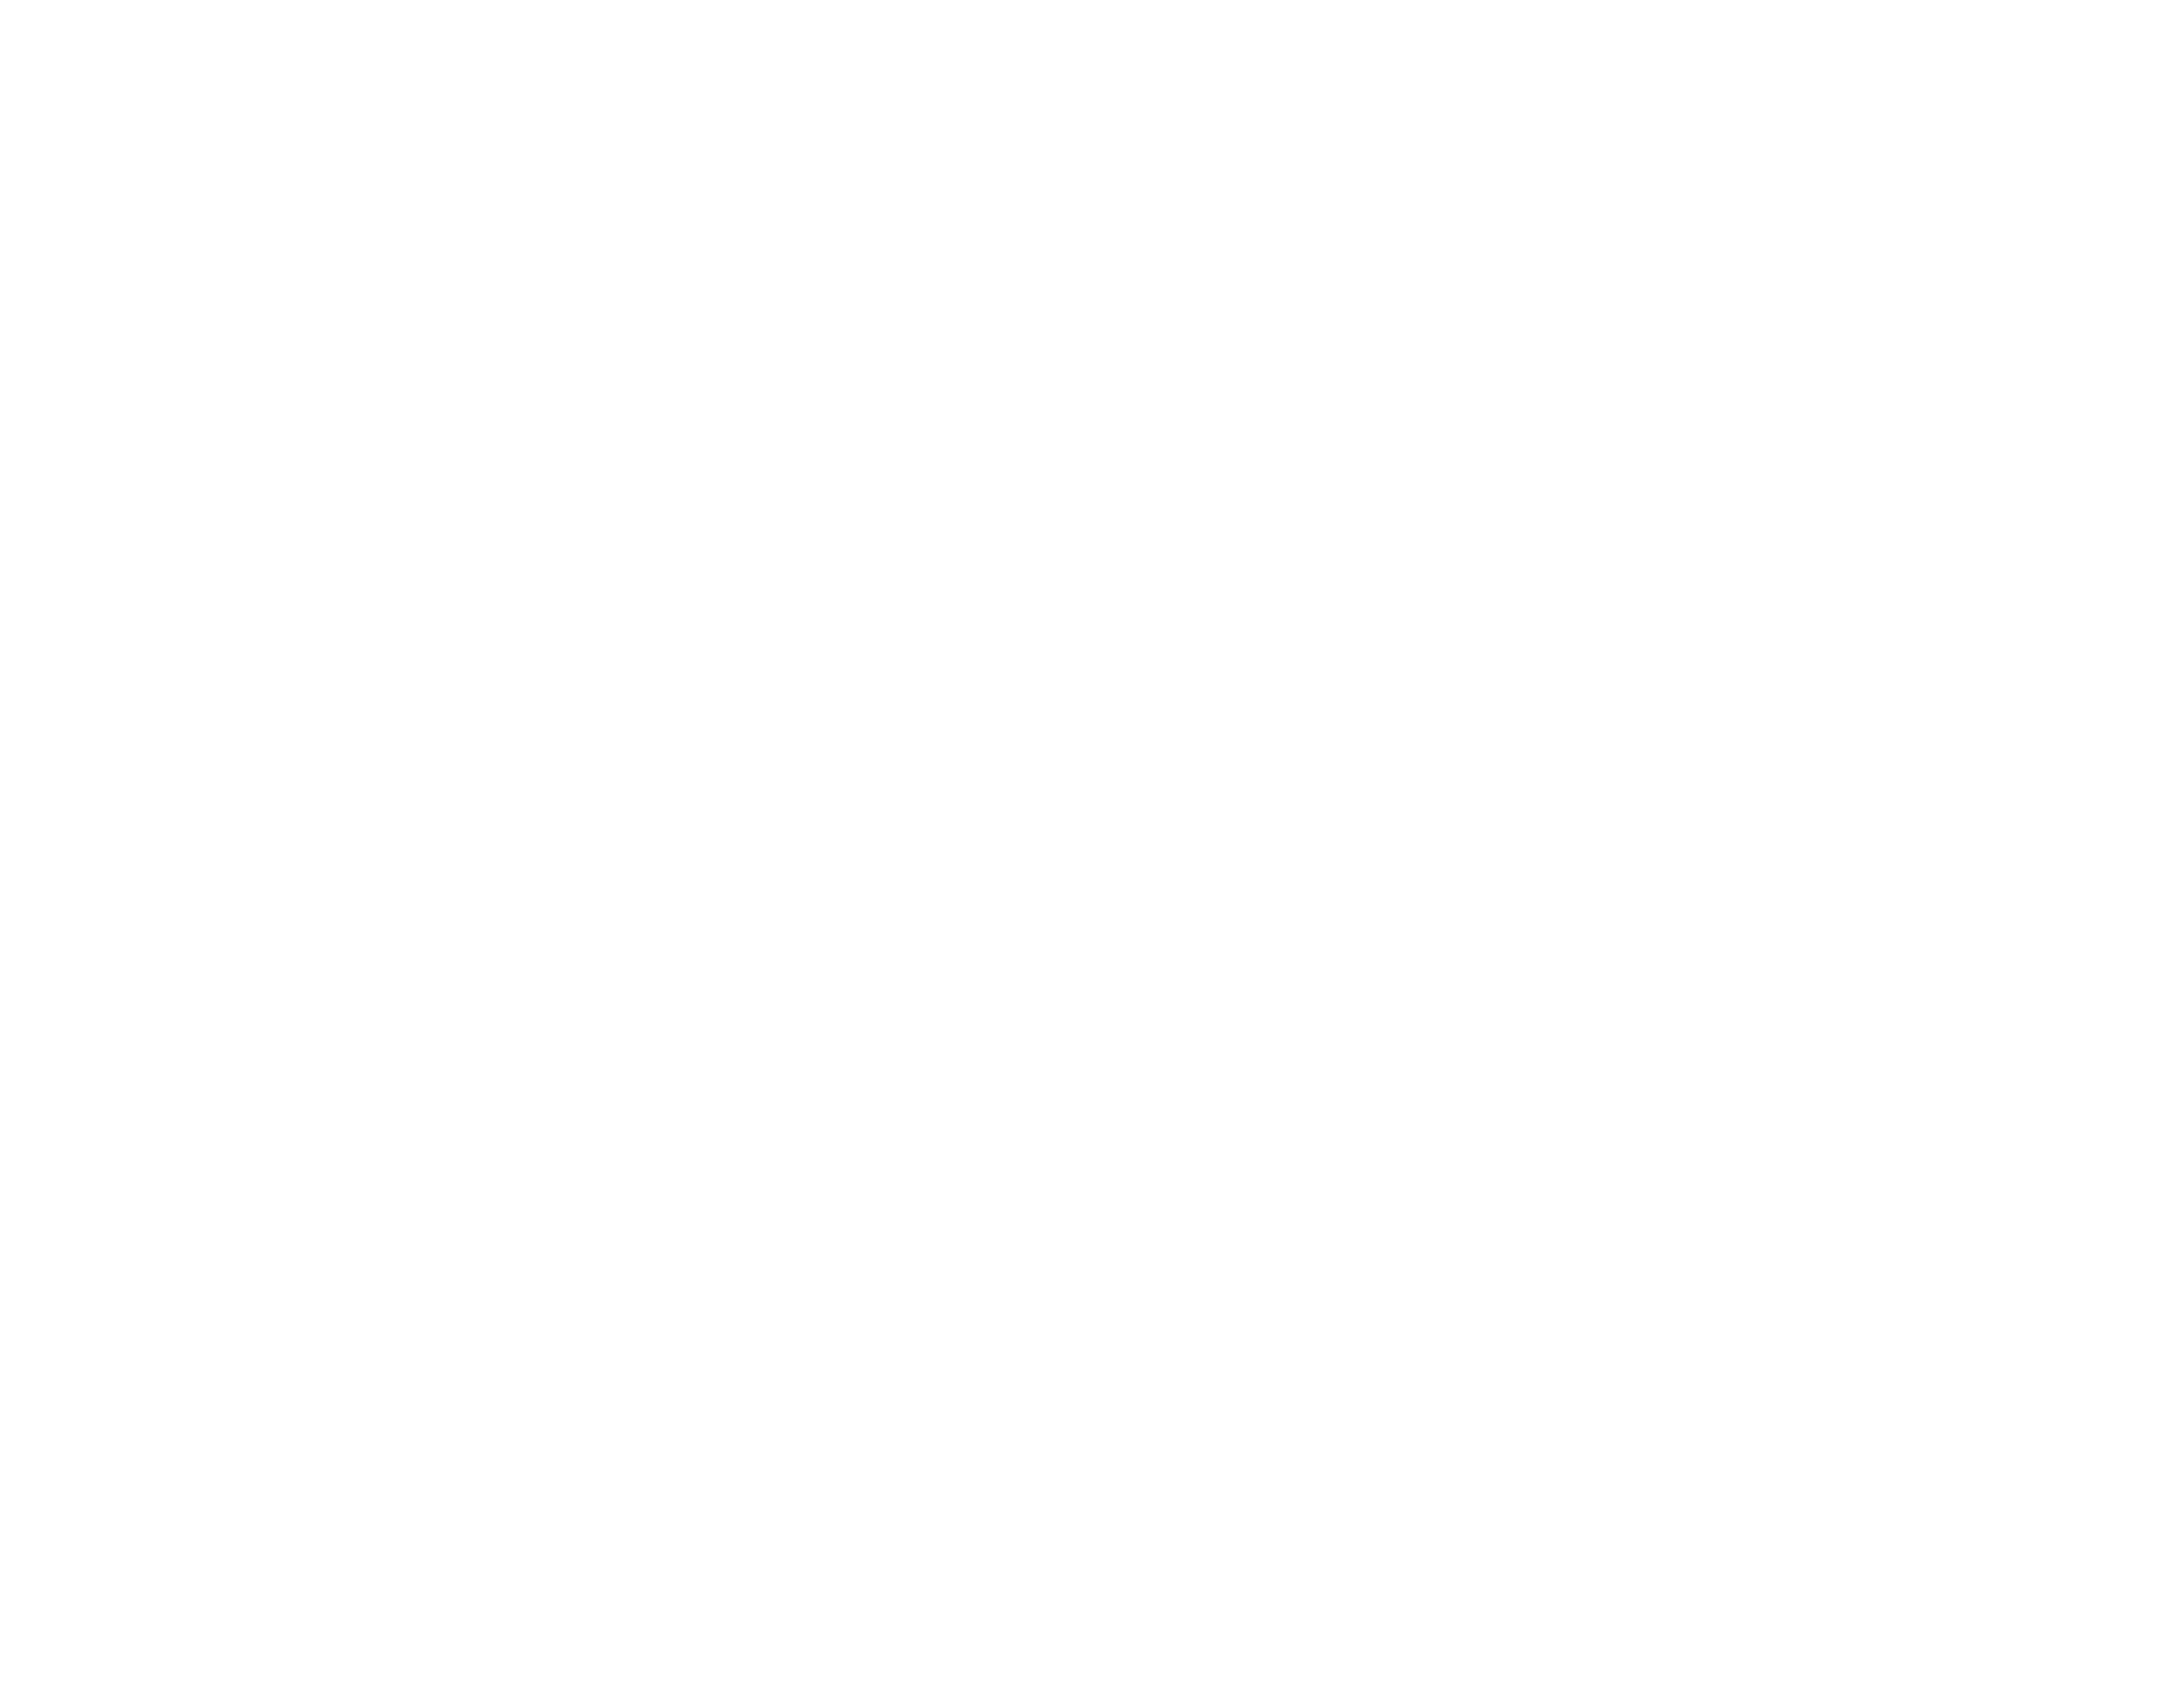 Baron Rings